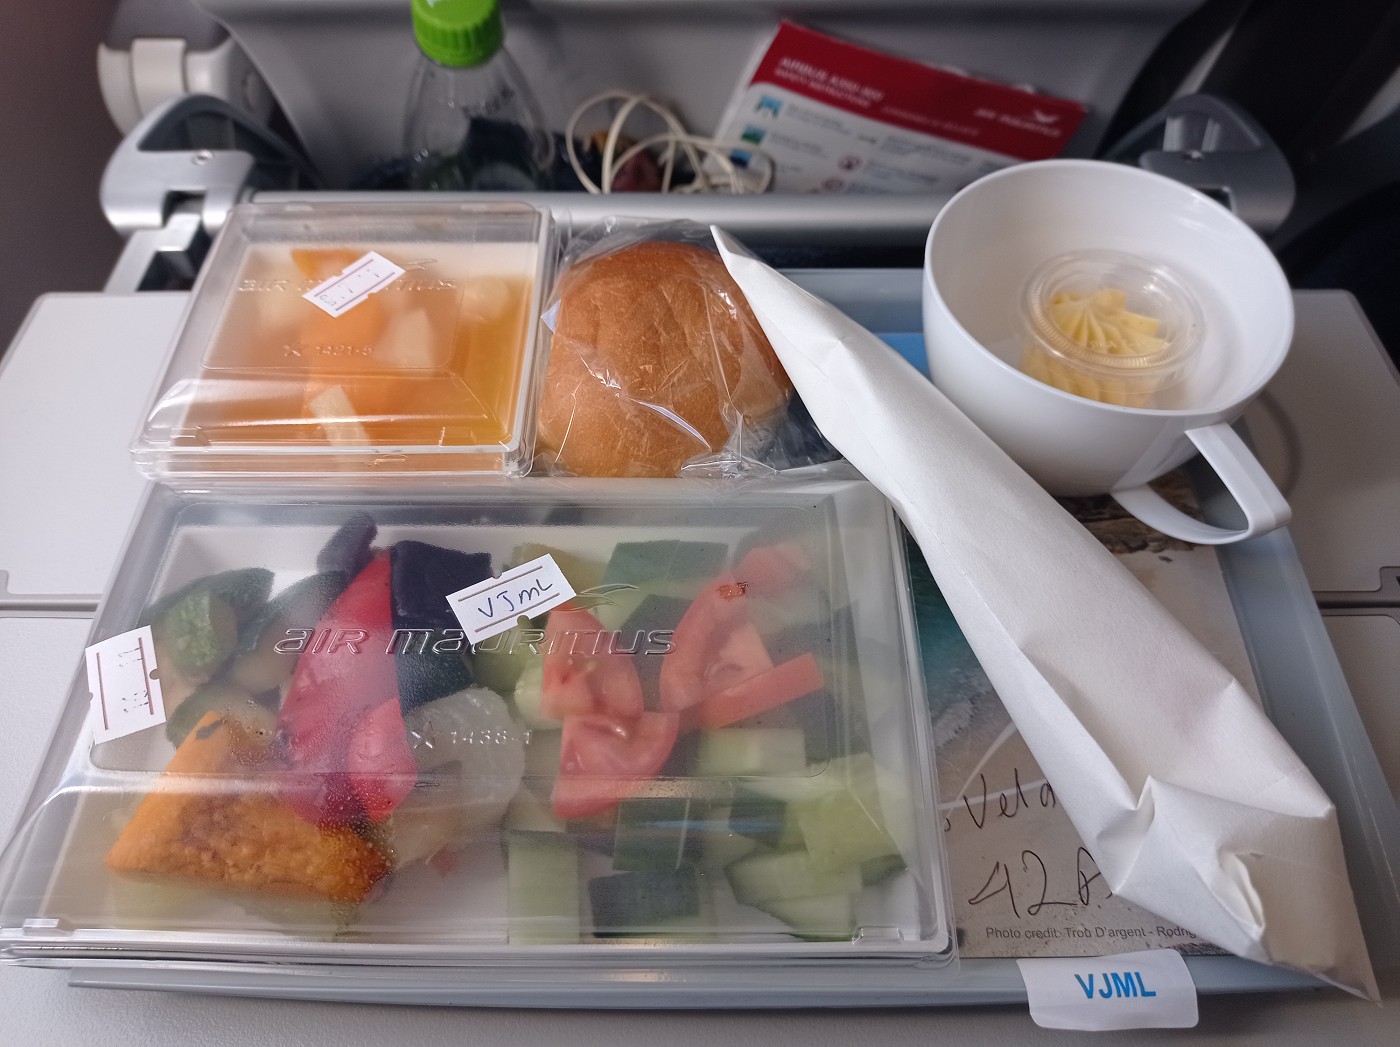 Air Mauritius VJML vegetarian jain meal plane food